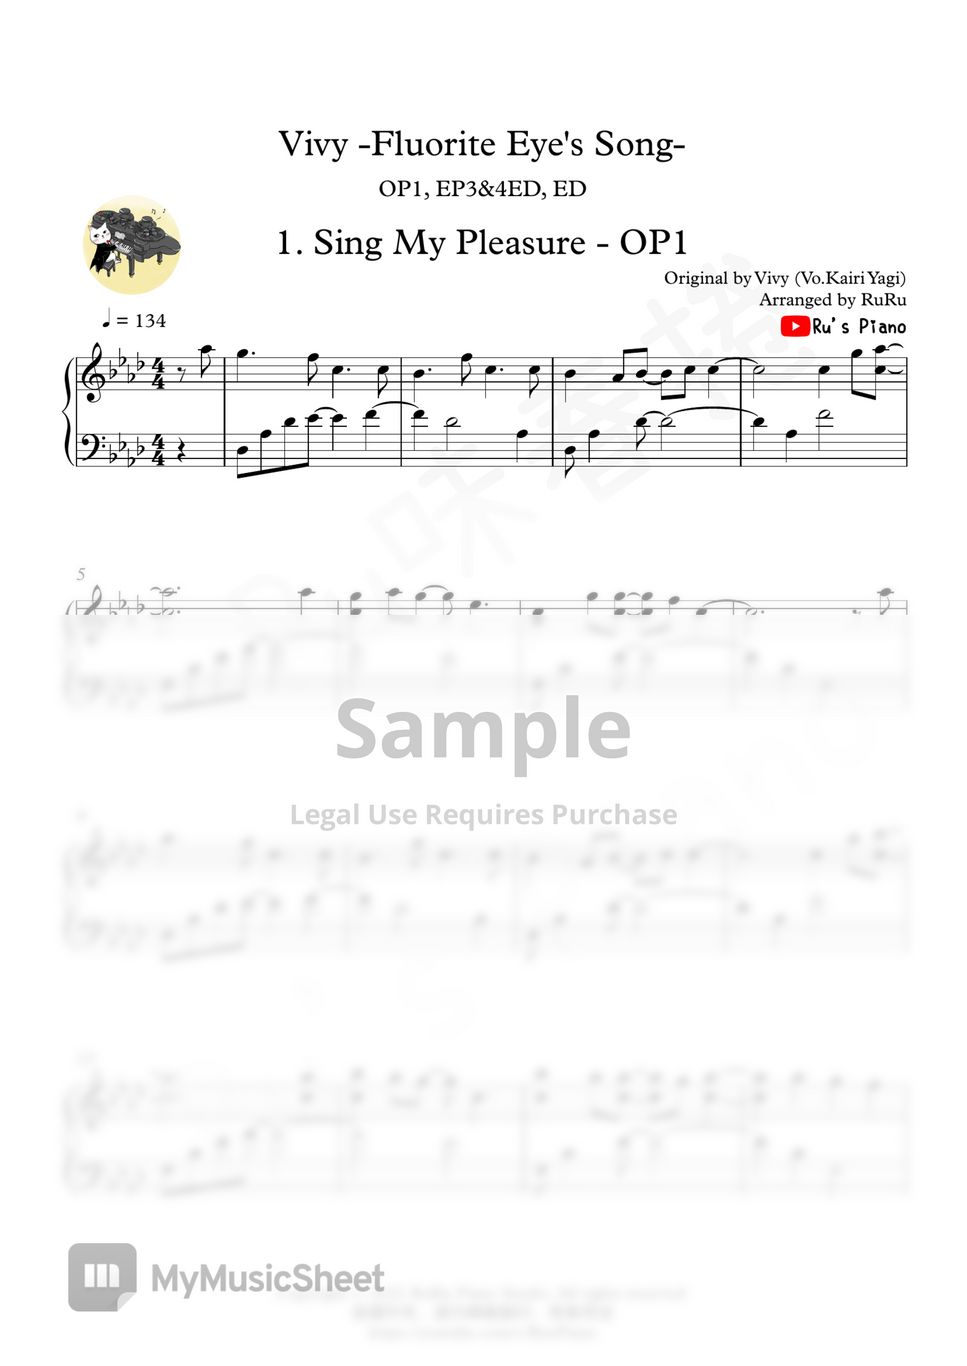 Vivy -Fluorite Eye's Song - 「Sing My Pleasure / Ensemble for Polaris / ED」 by Ru's Piano